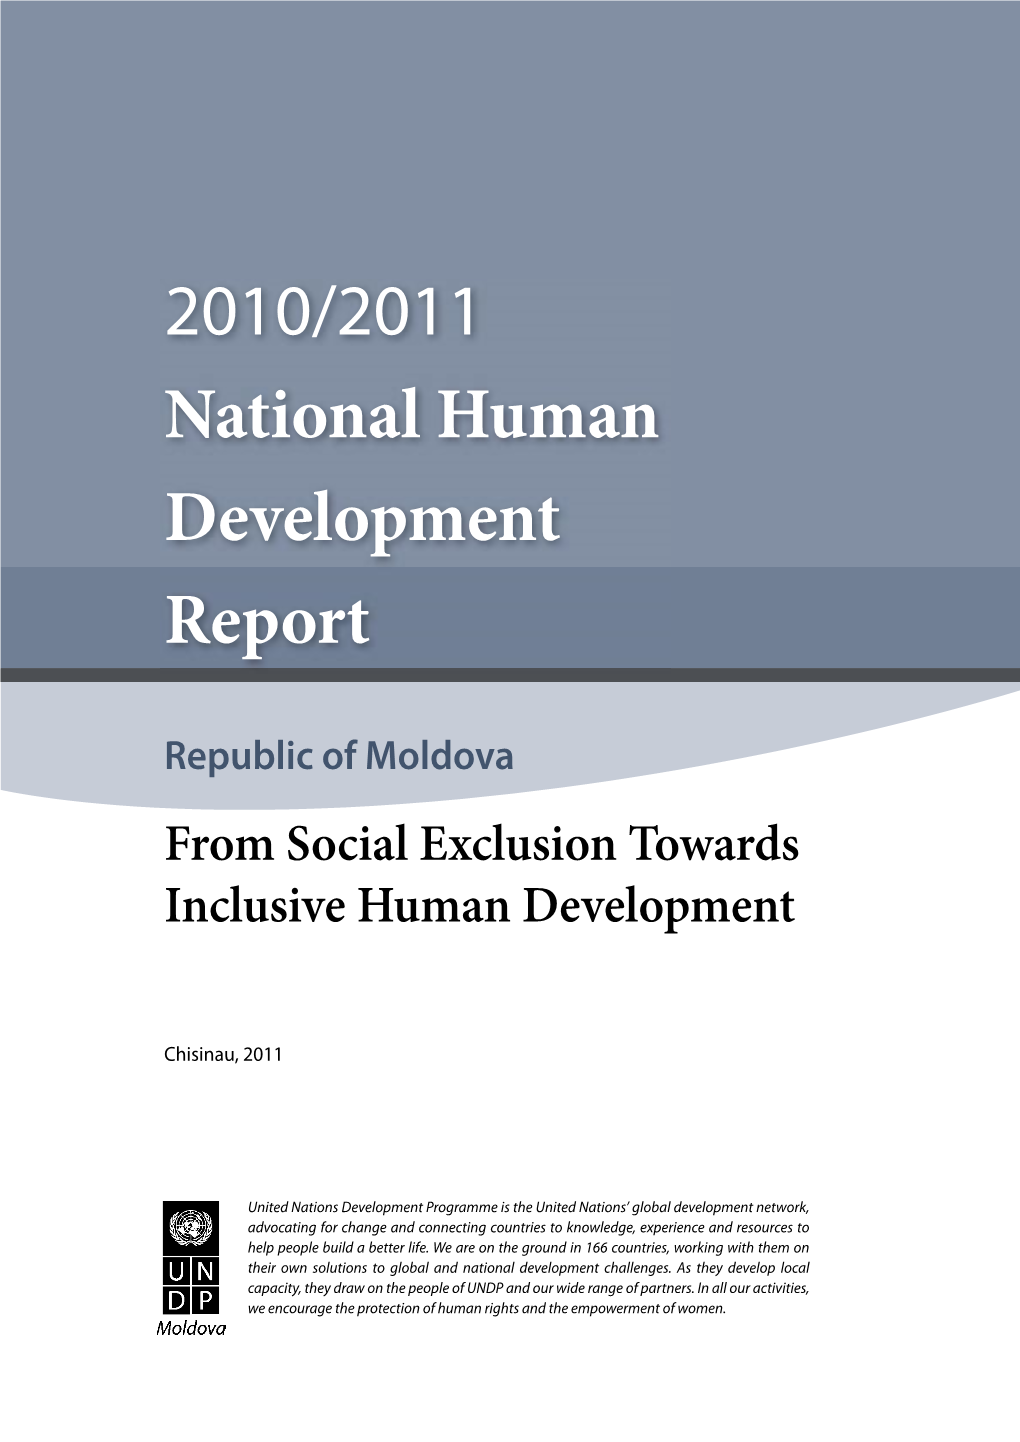 2010/2011 National Human Development Report